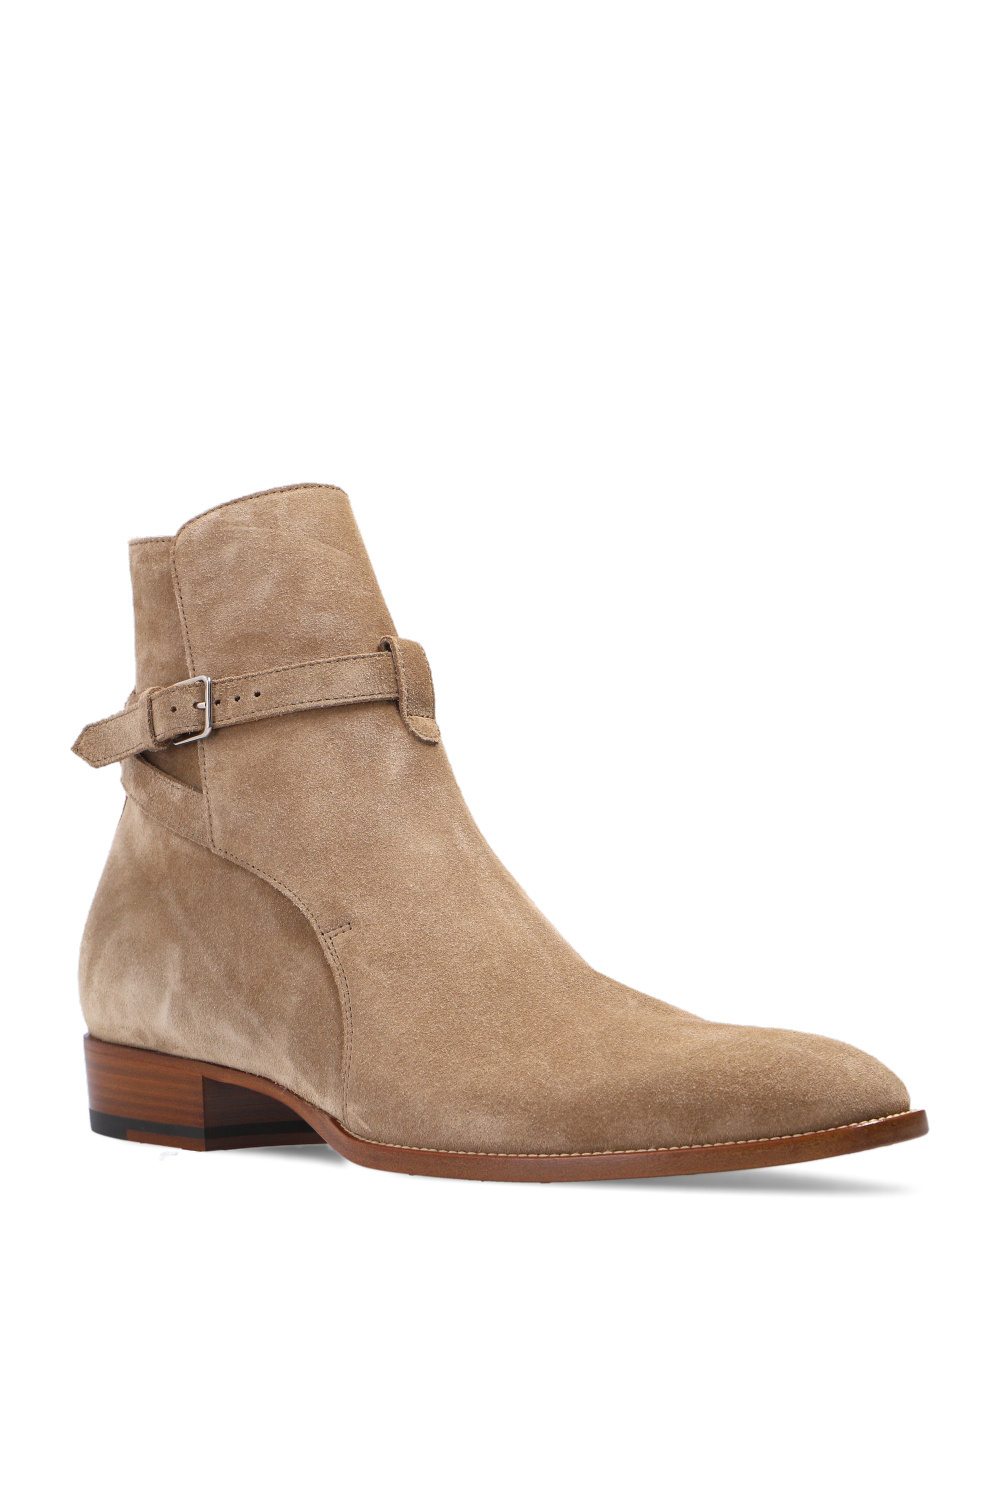 Saint Laurent ‘Wyatt’ leather boots